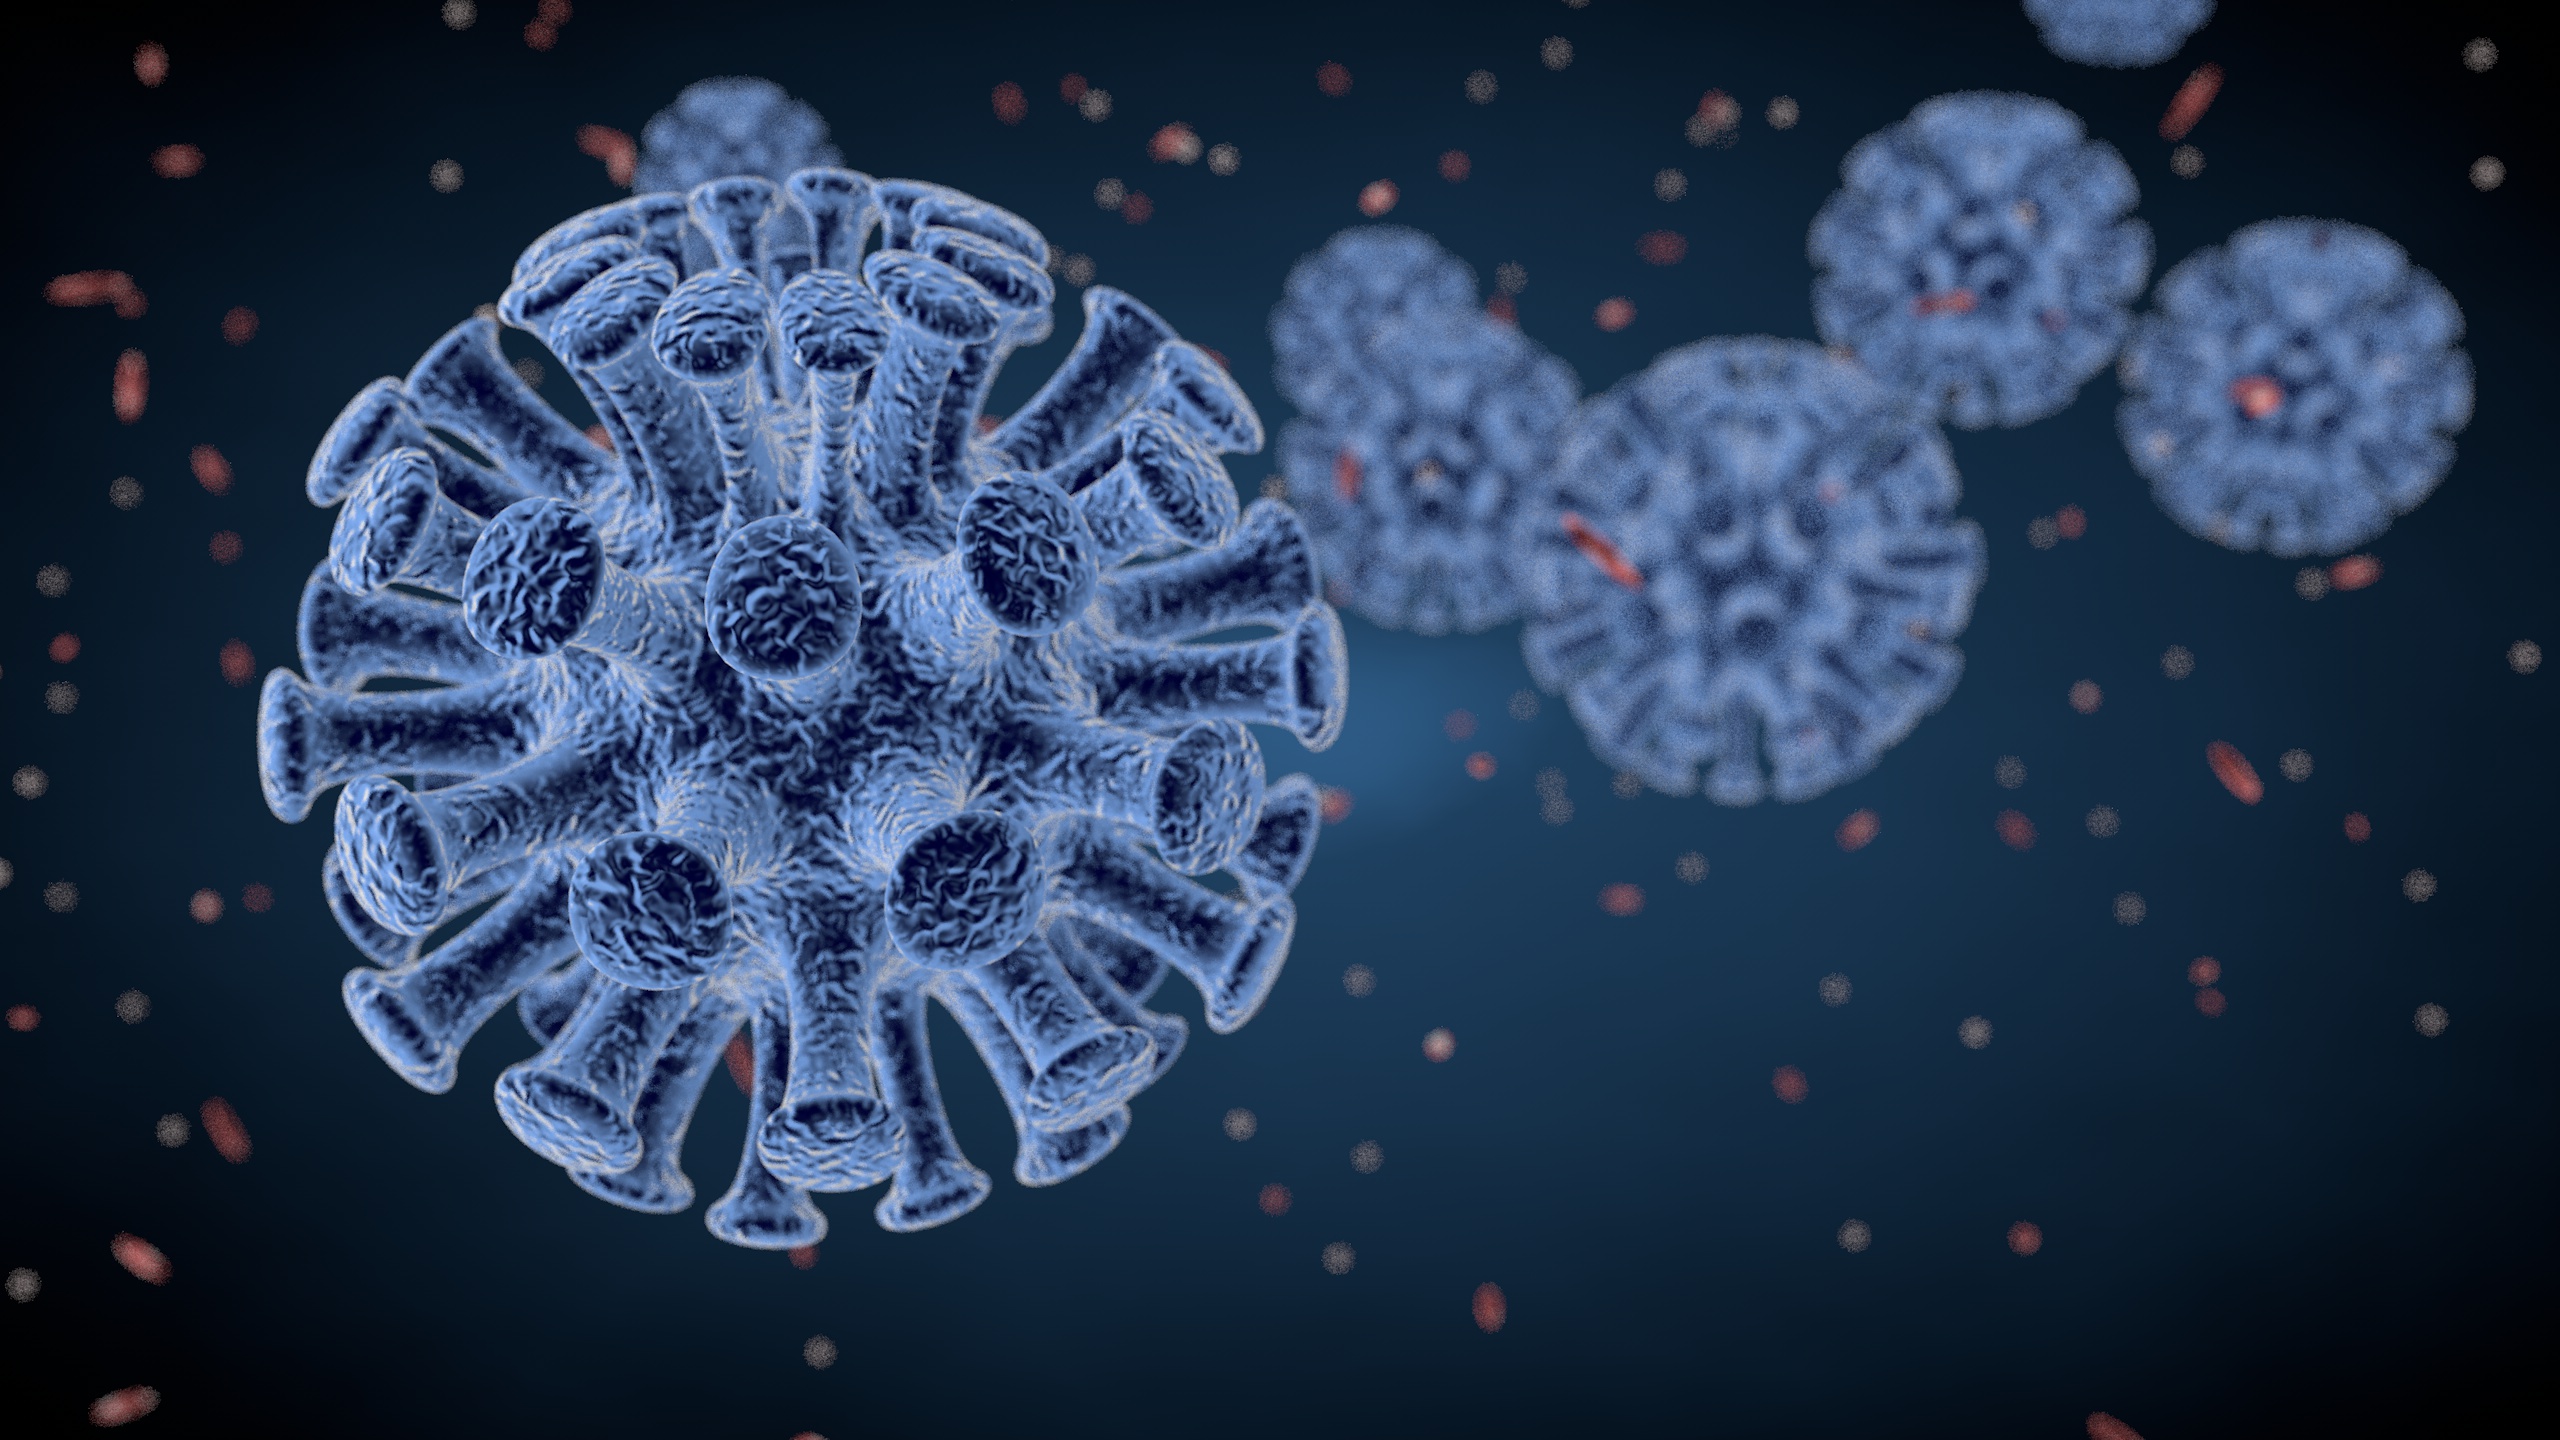 3D visualisation of a virus